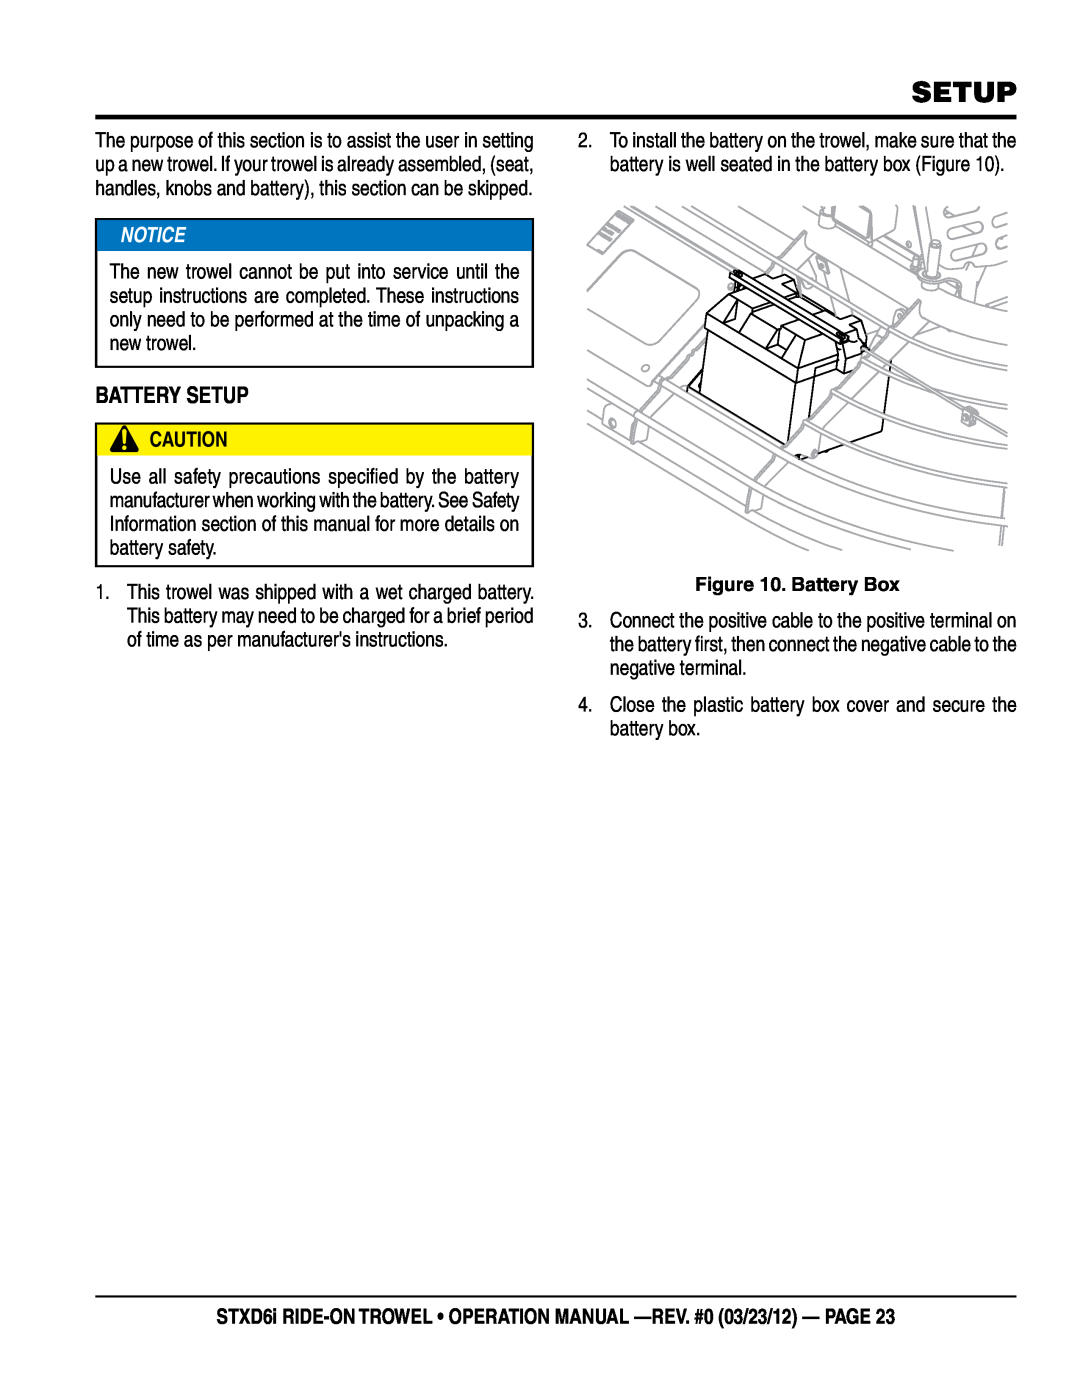 Multiquip setup, Battery Setup, STXD6i RIDE-ON TROWEL operation manual -rev. #0 03/23/12 - page 